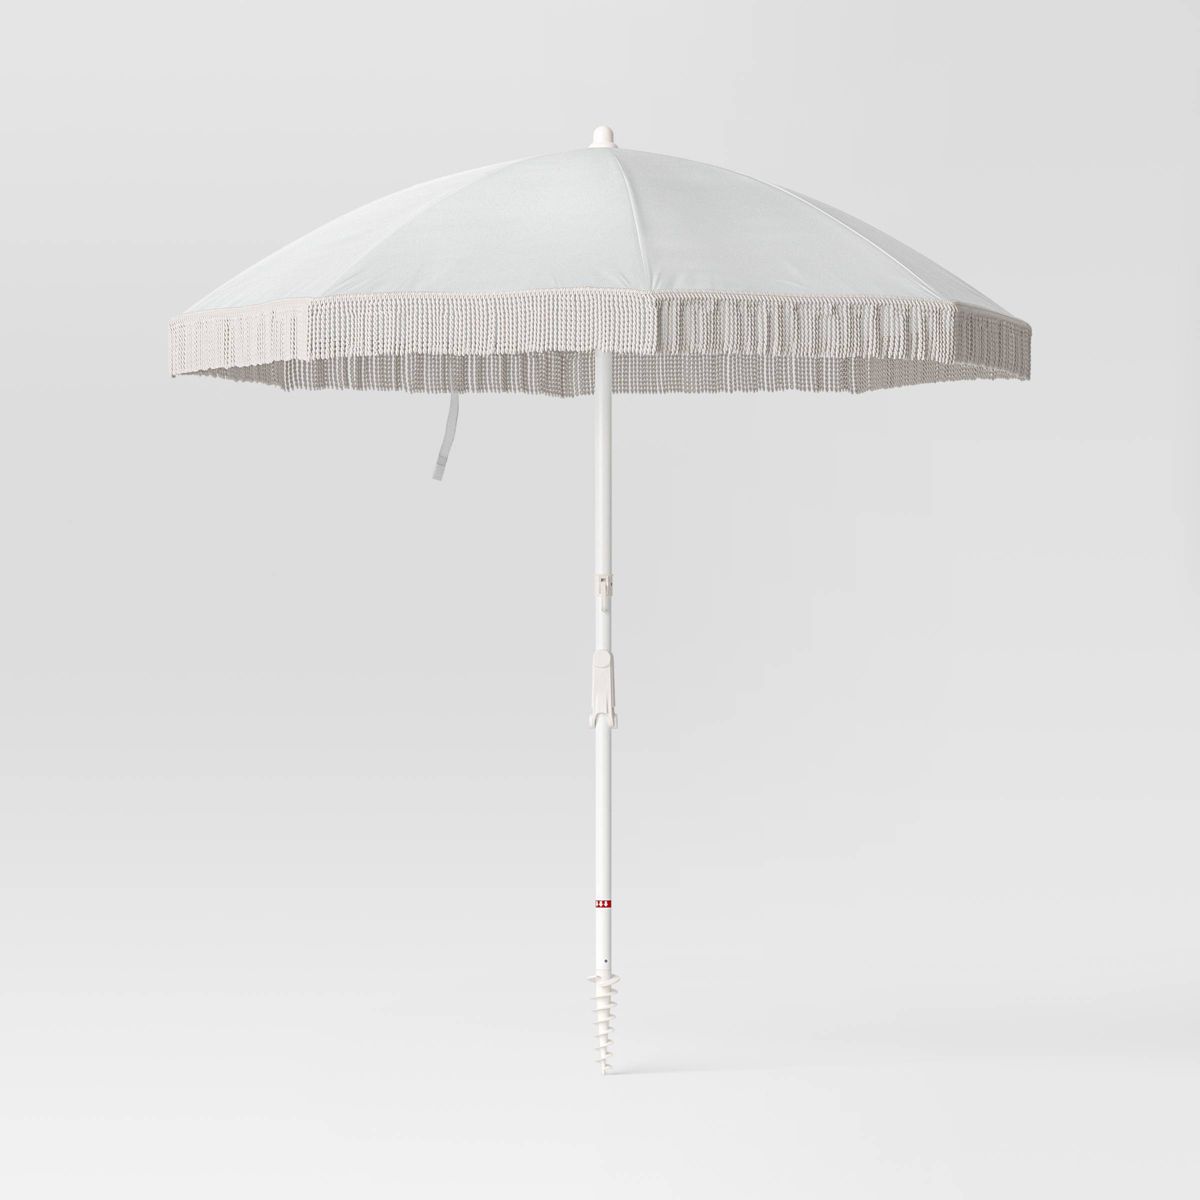 6'x6' Round Outdoor Patio Beach Umbrella with Fringe Ivory - Threshold